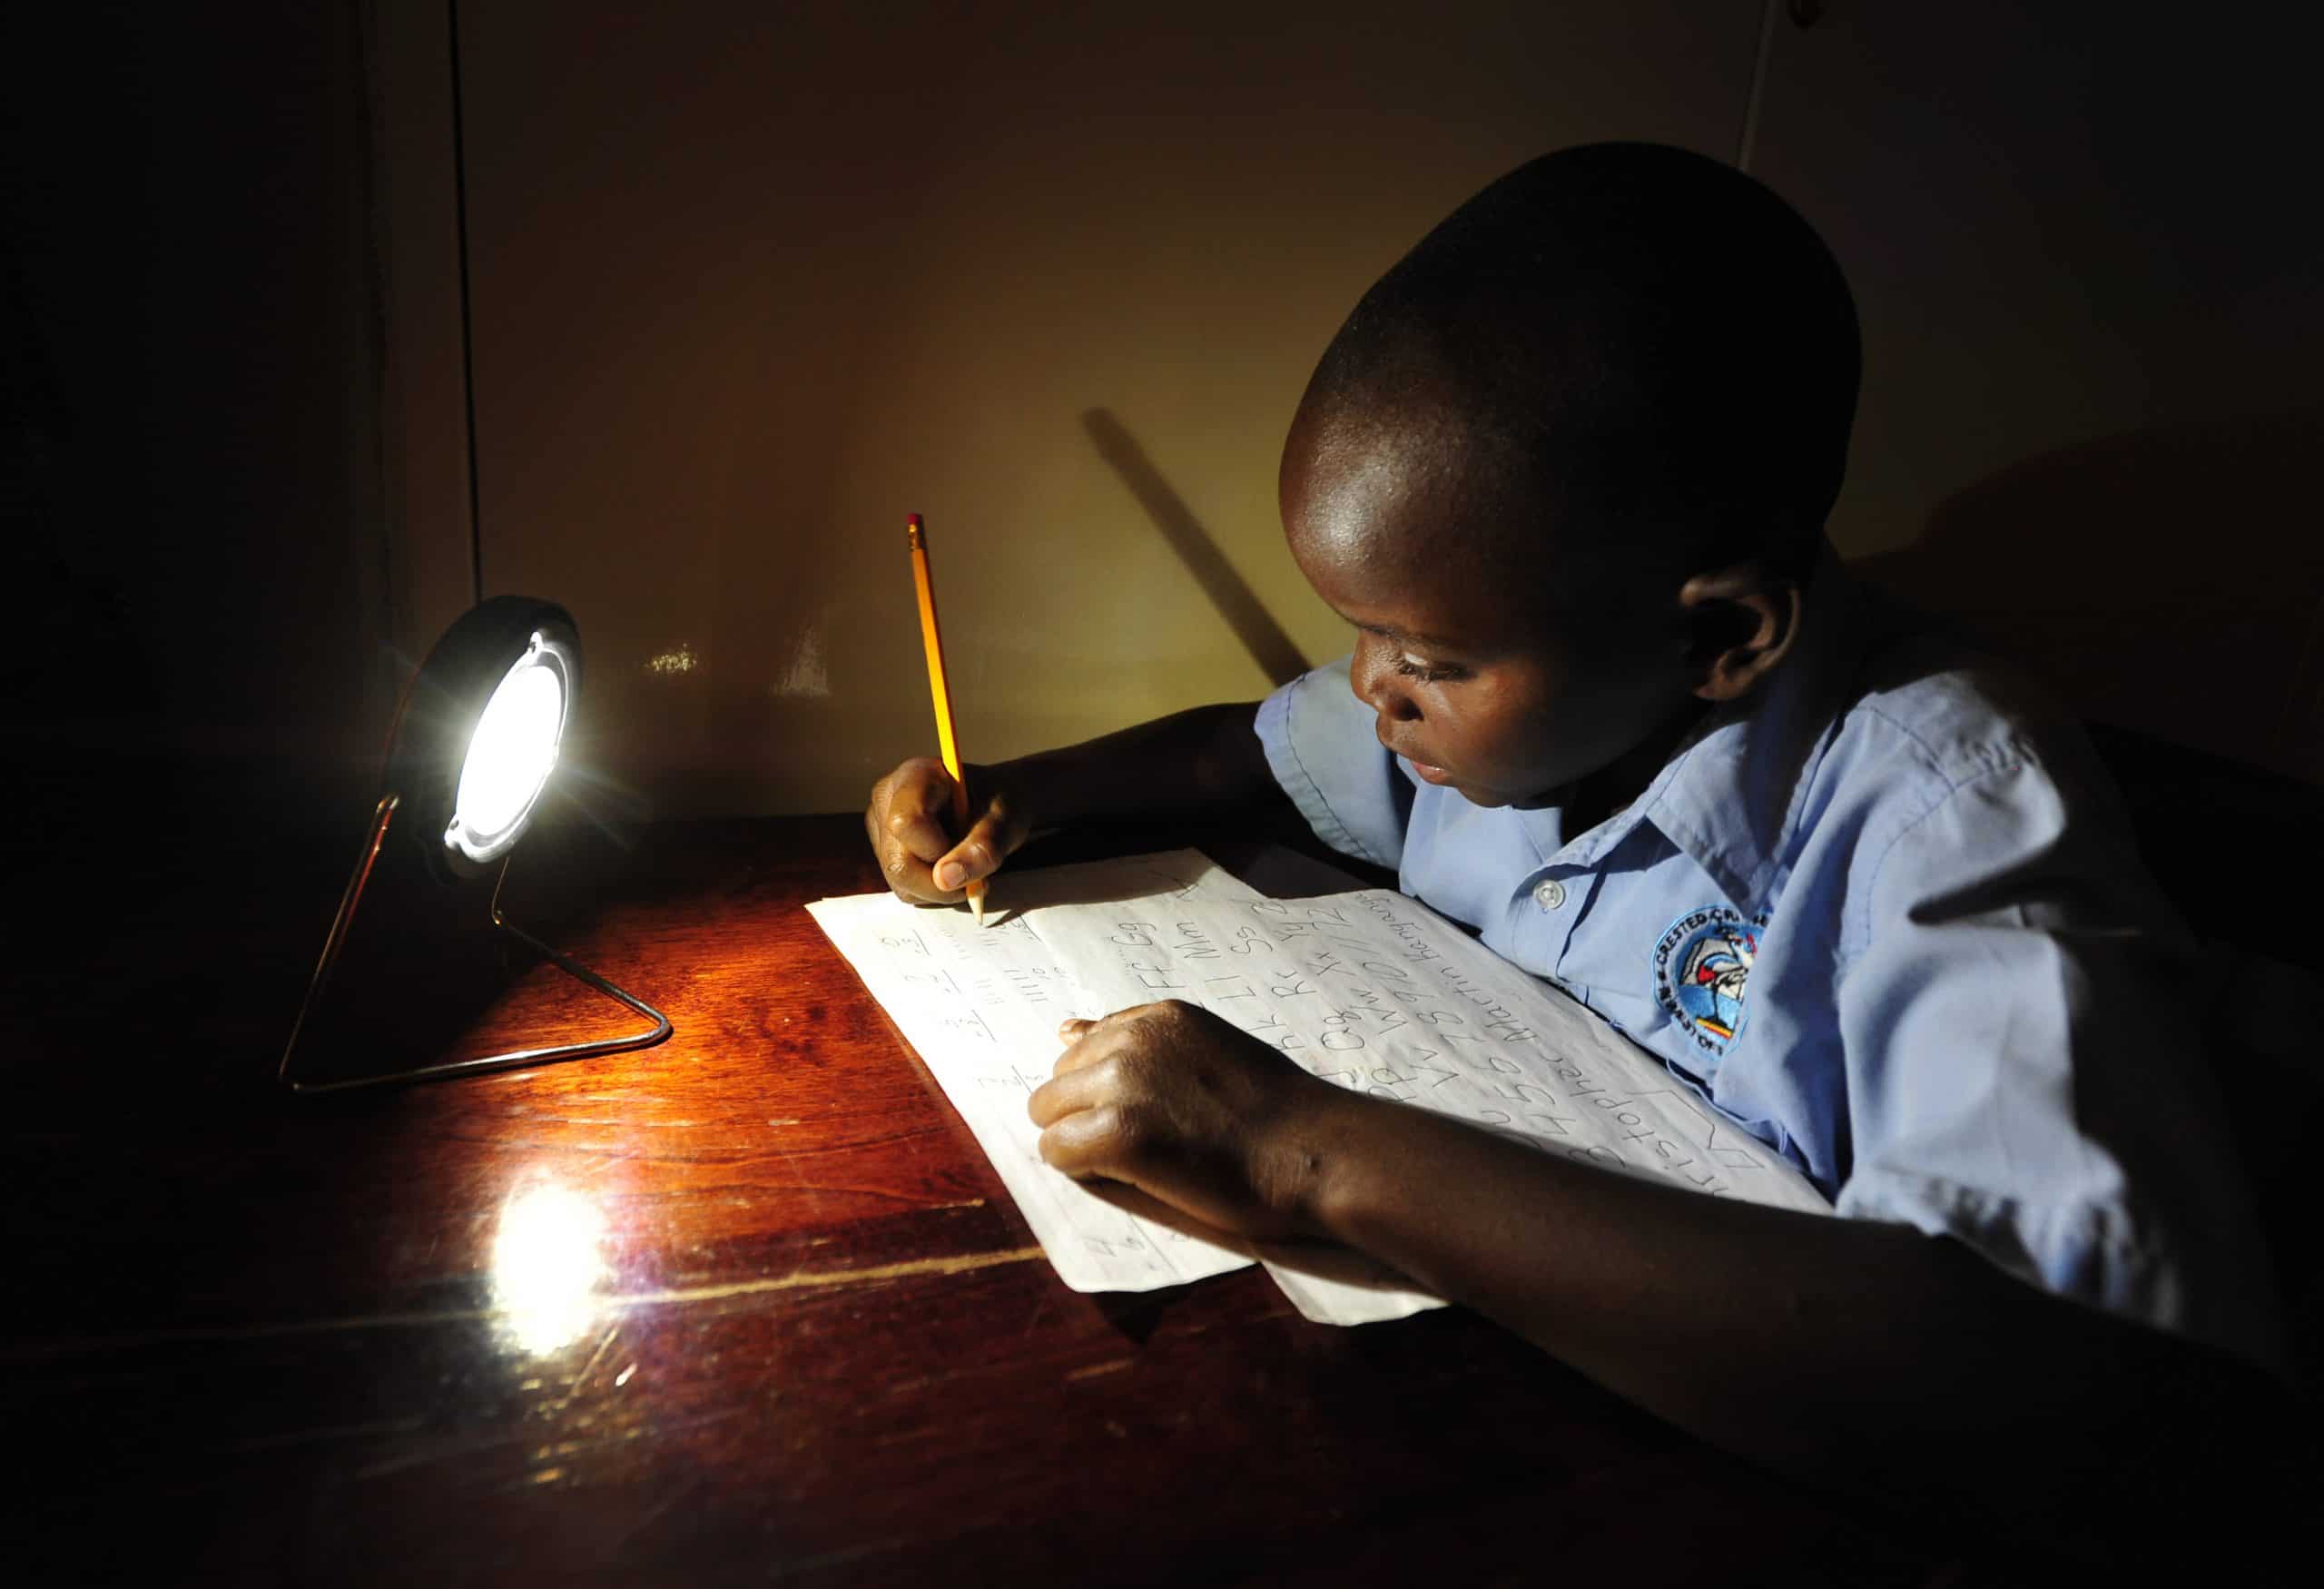 A boy writing by lamplight